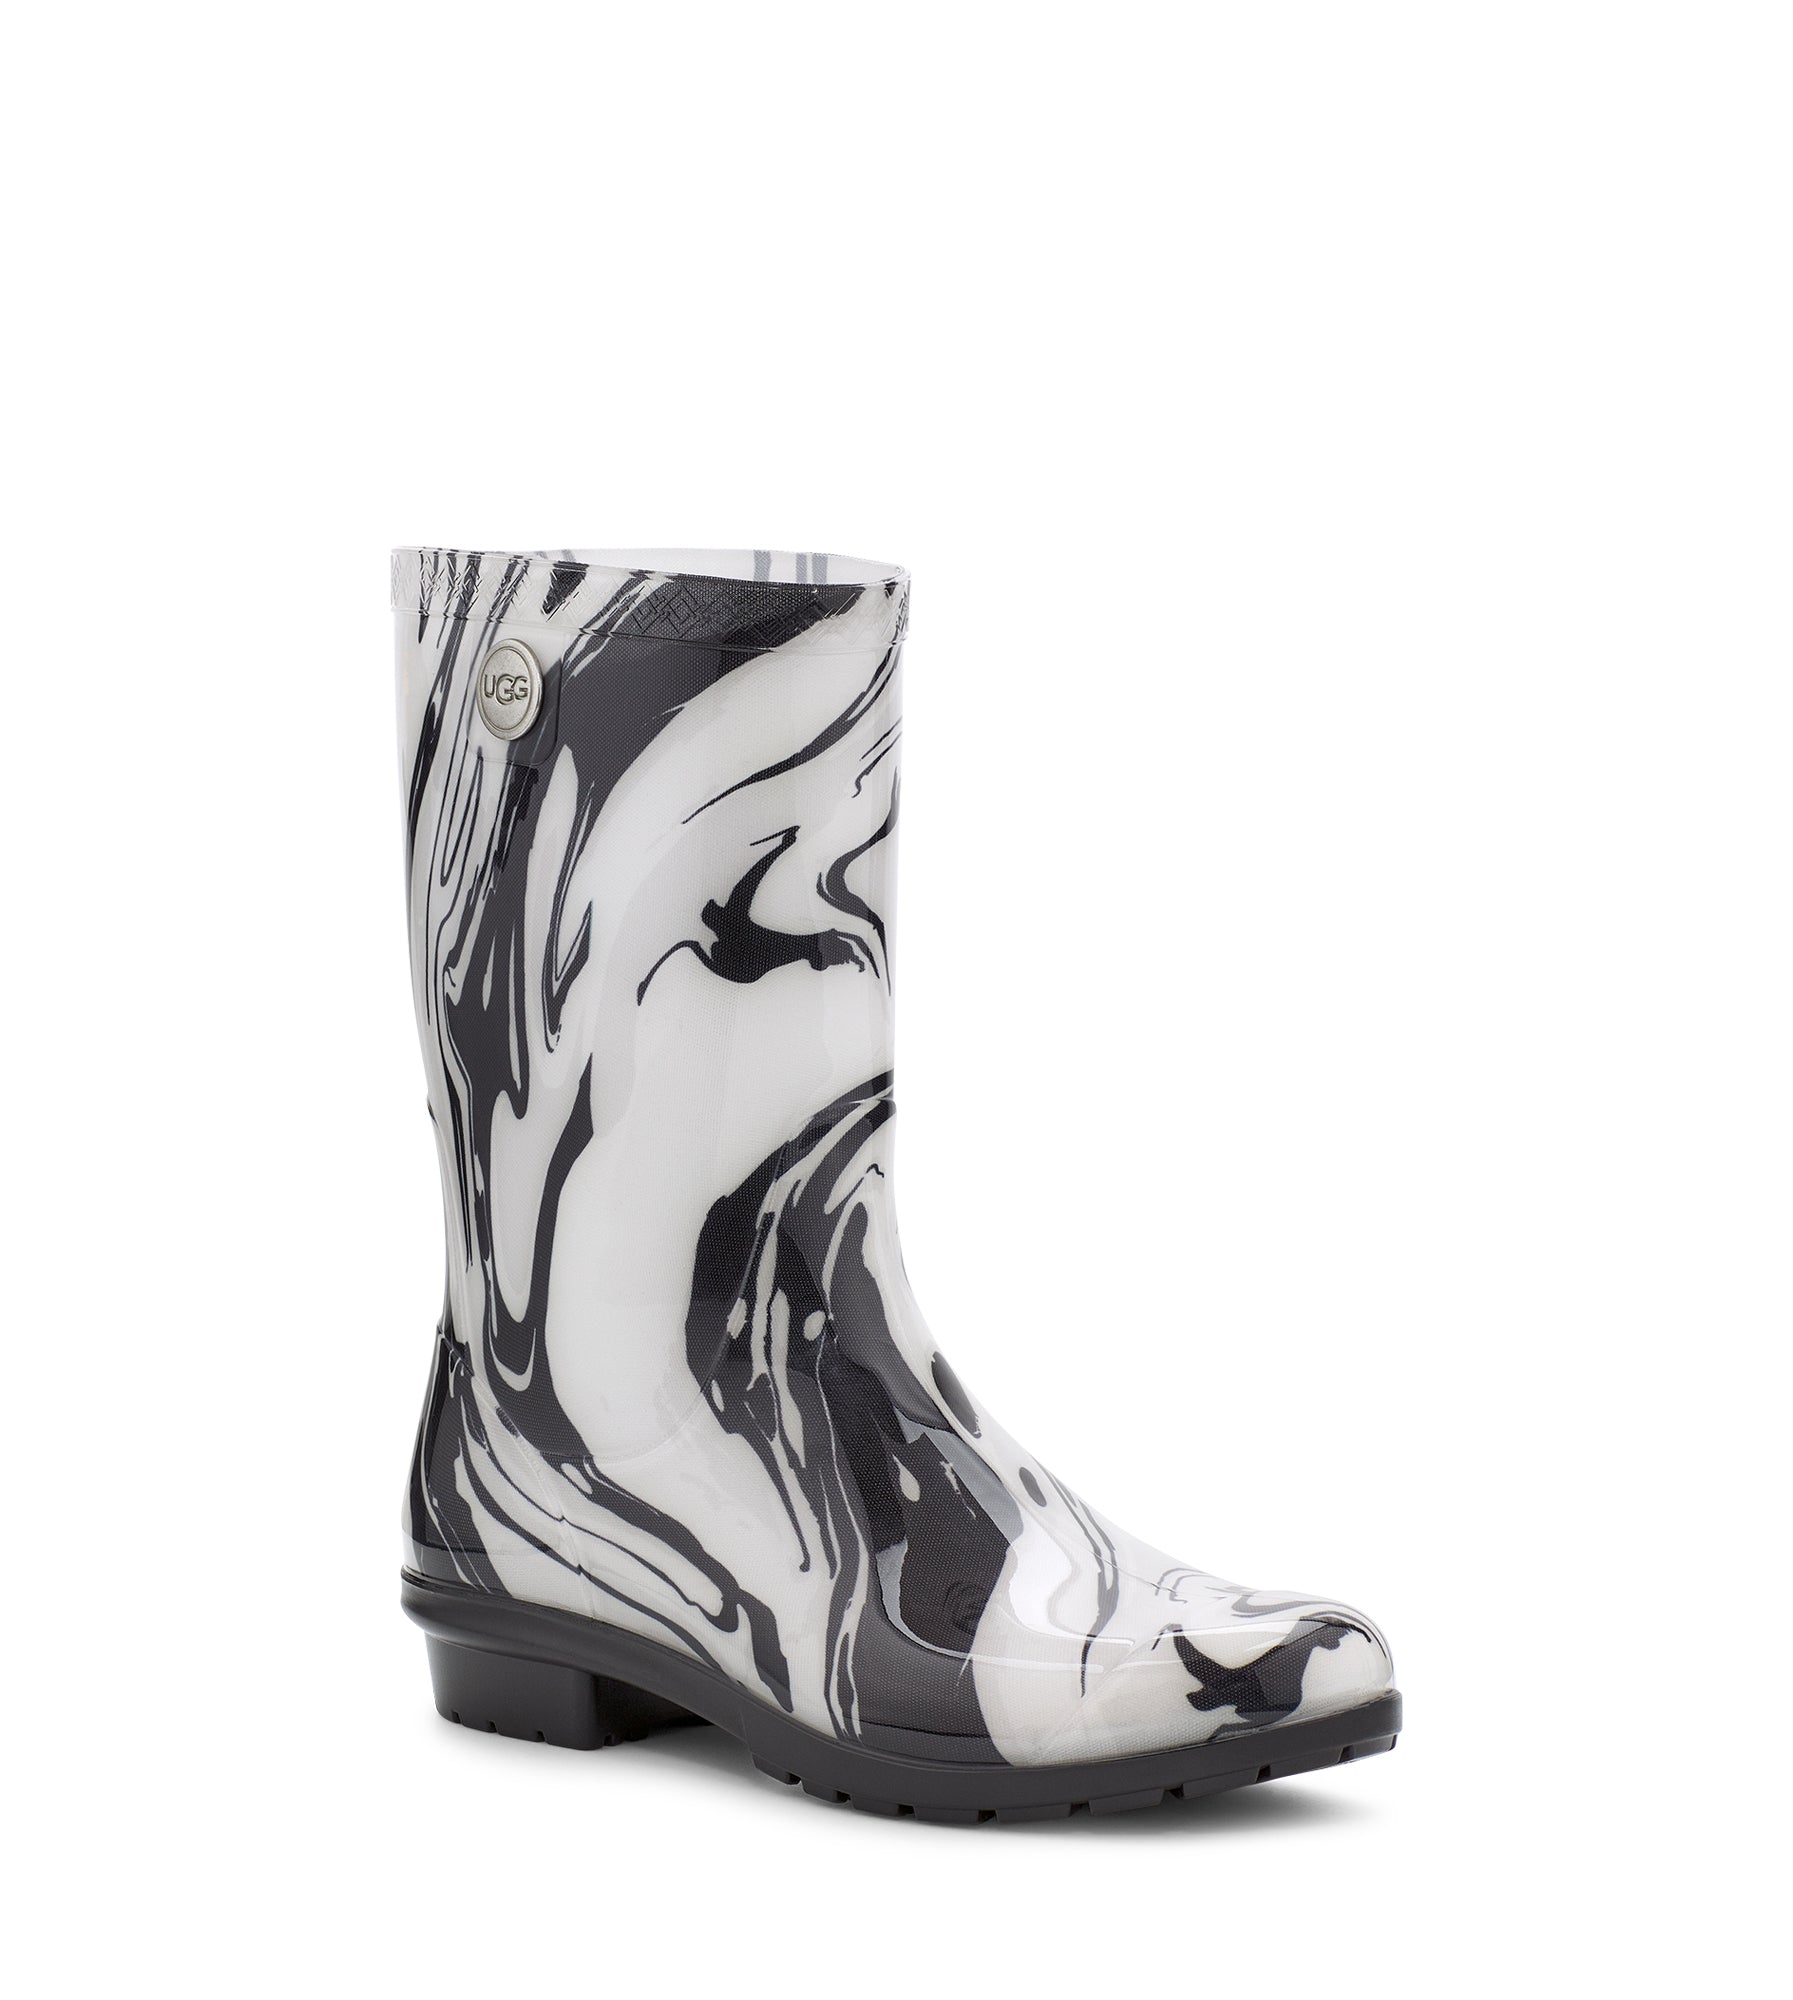 UGG Women’s Boots - Sienna Marble 